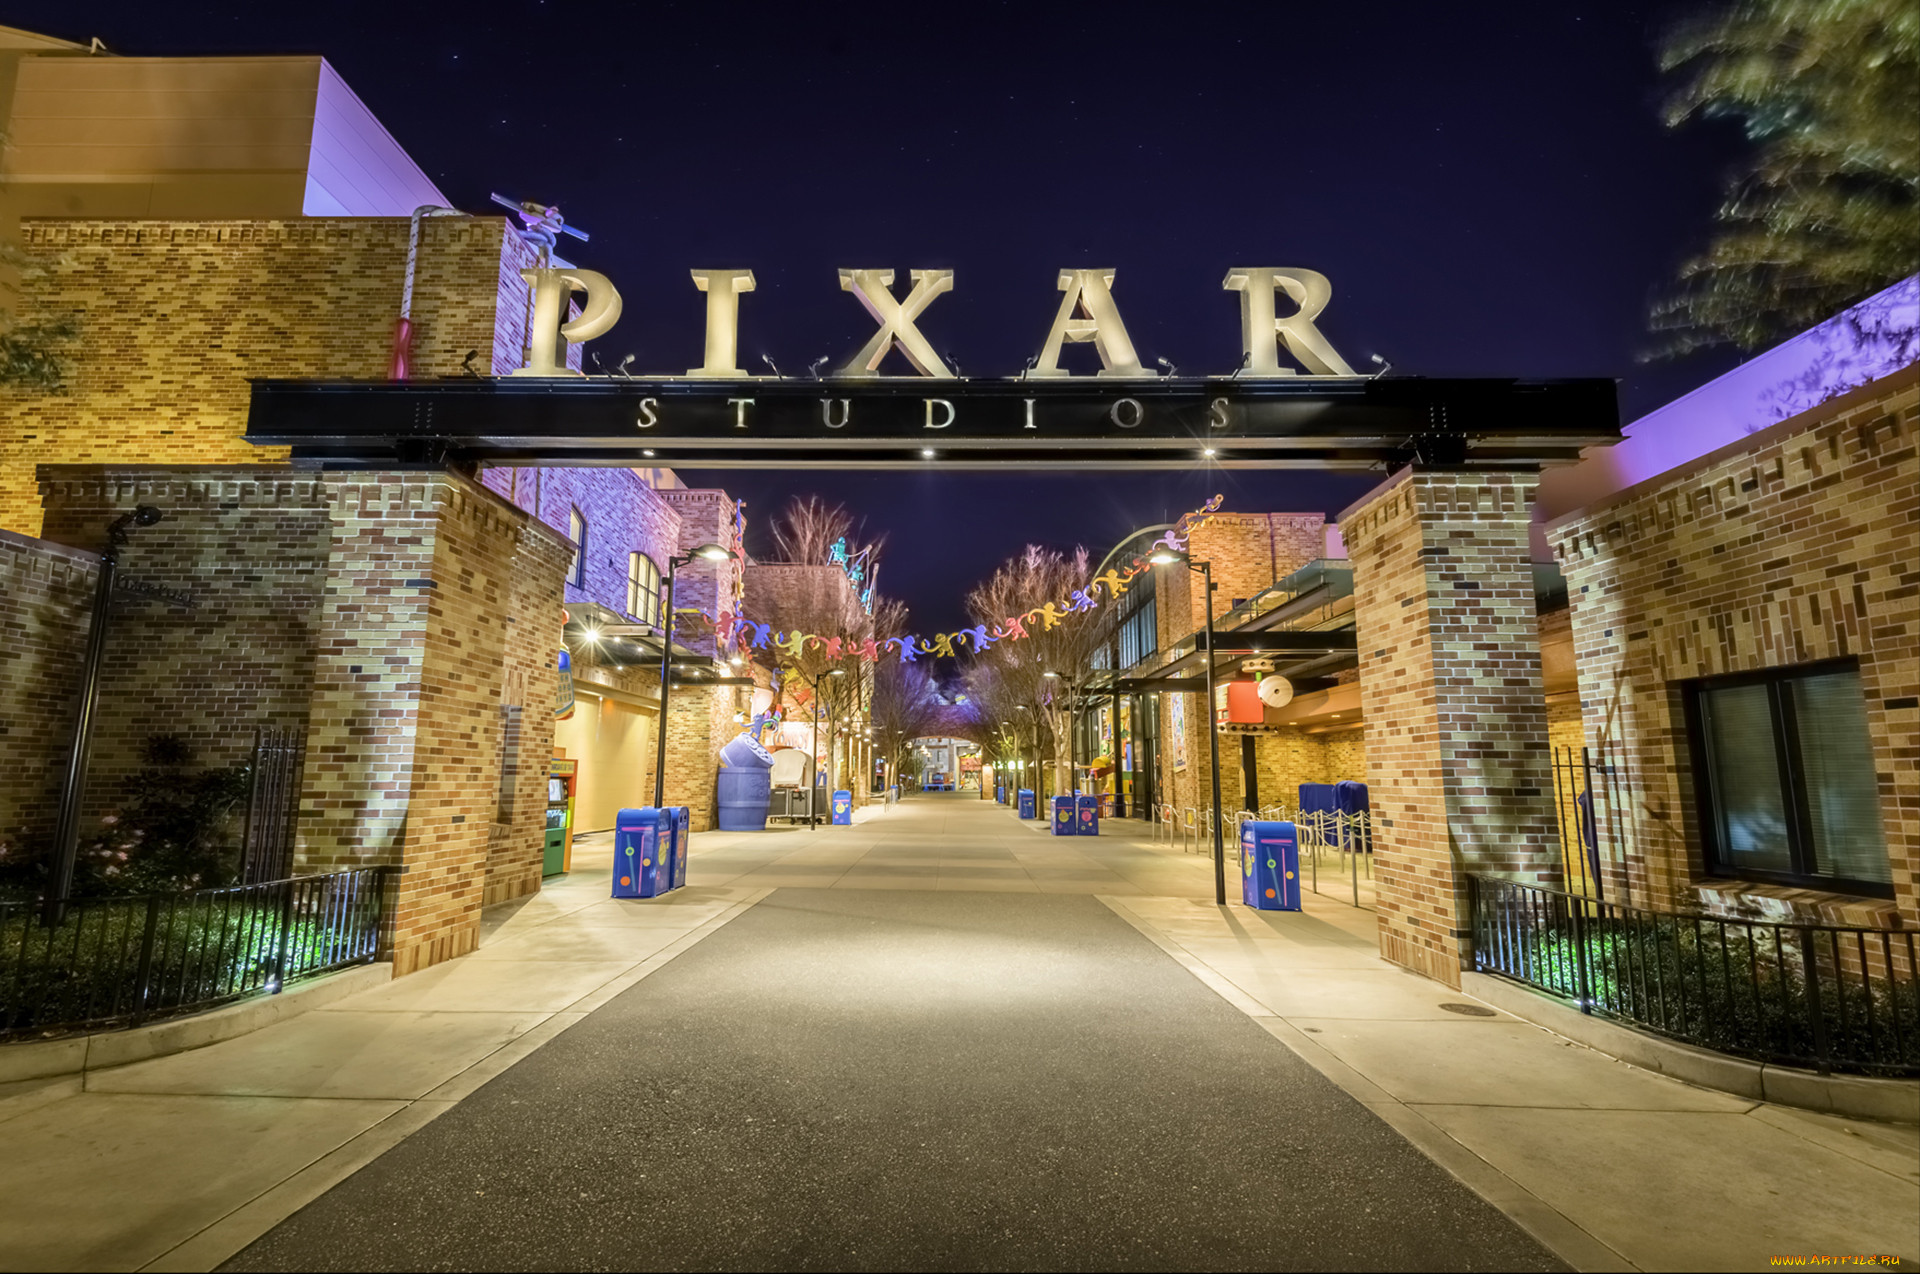 Пиксар фото. Студия Пиксар. Киностудия Pixar. Город Пиксар. Ночной город Пиксар.